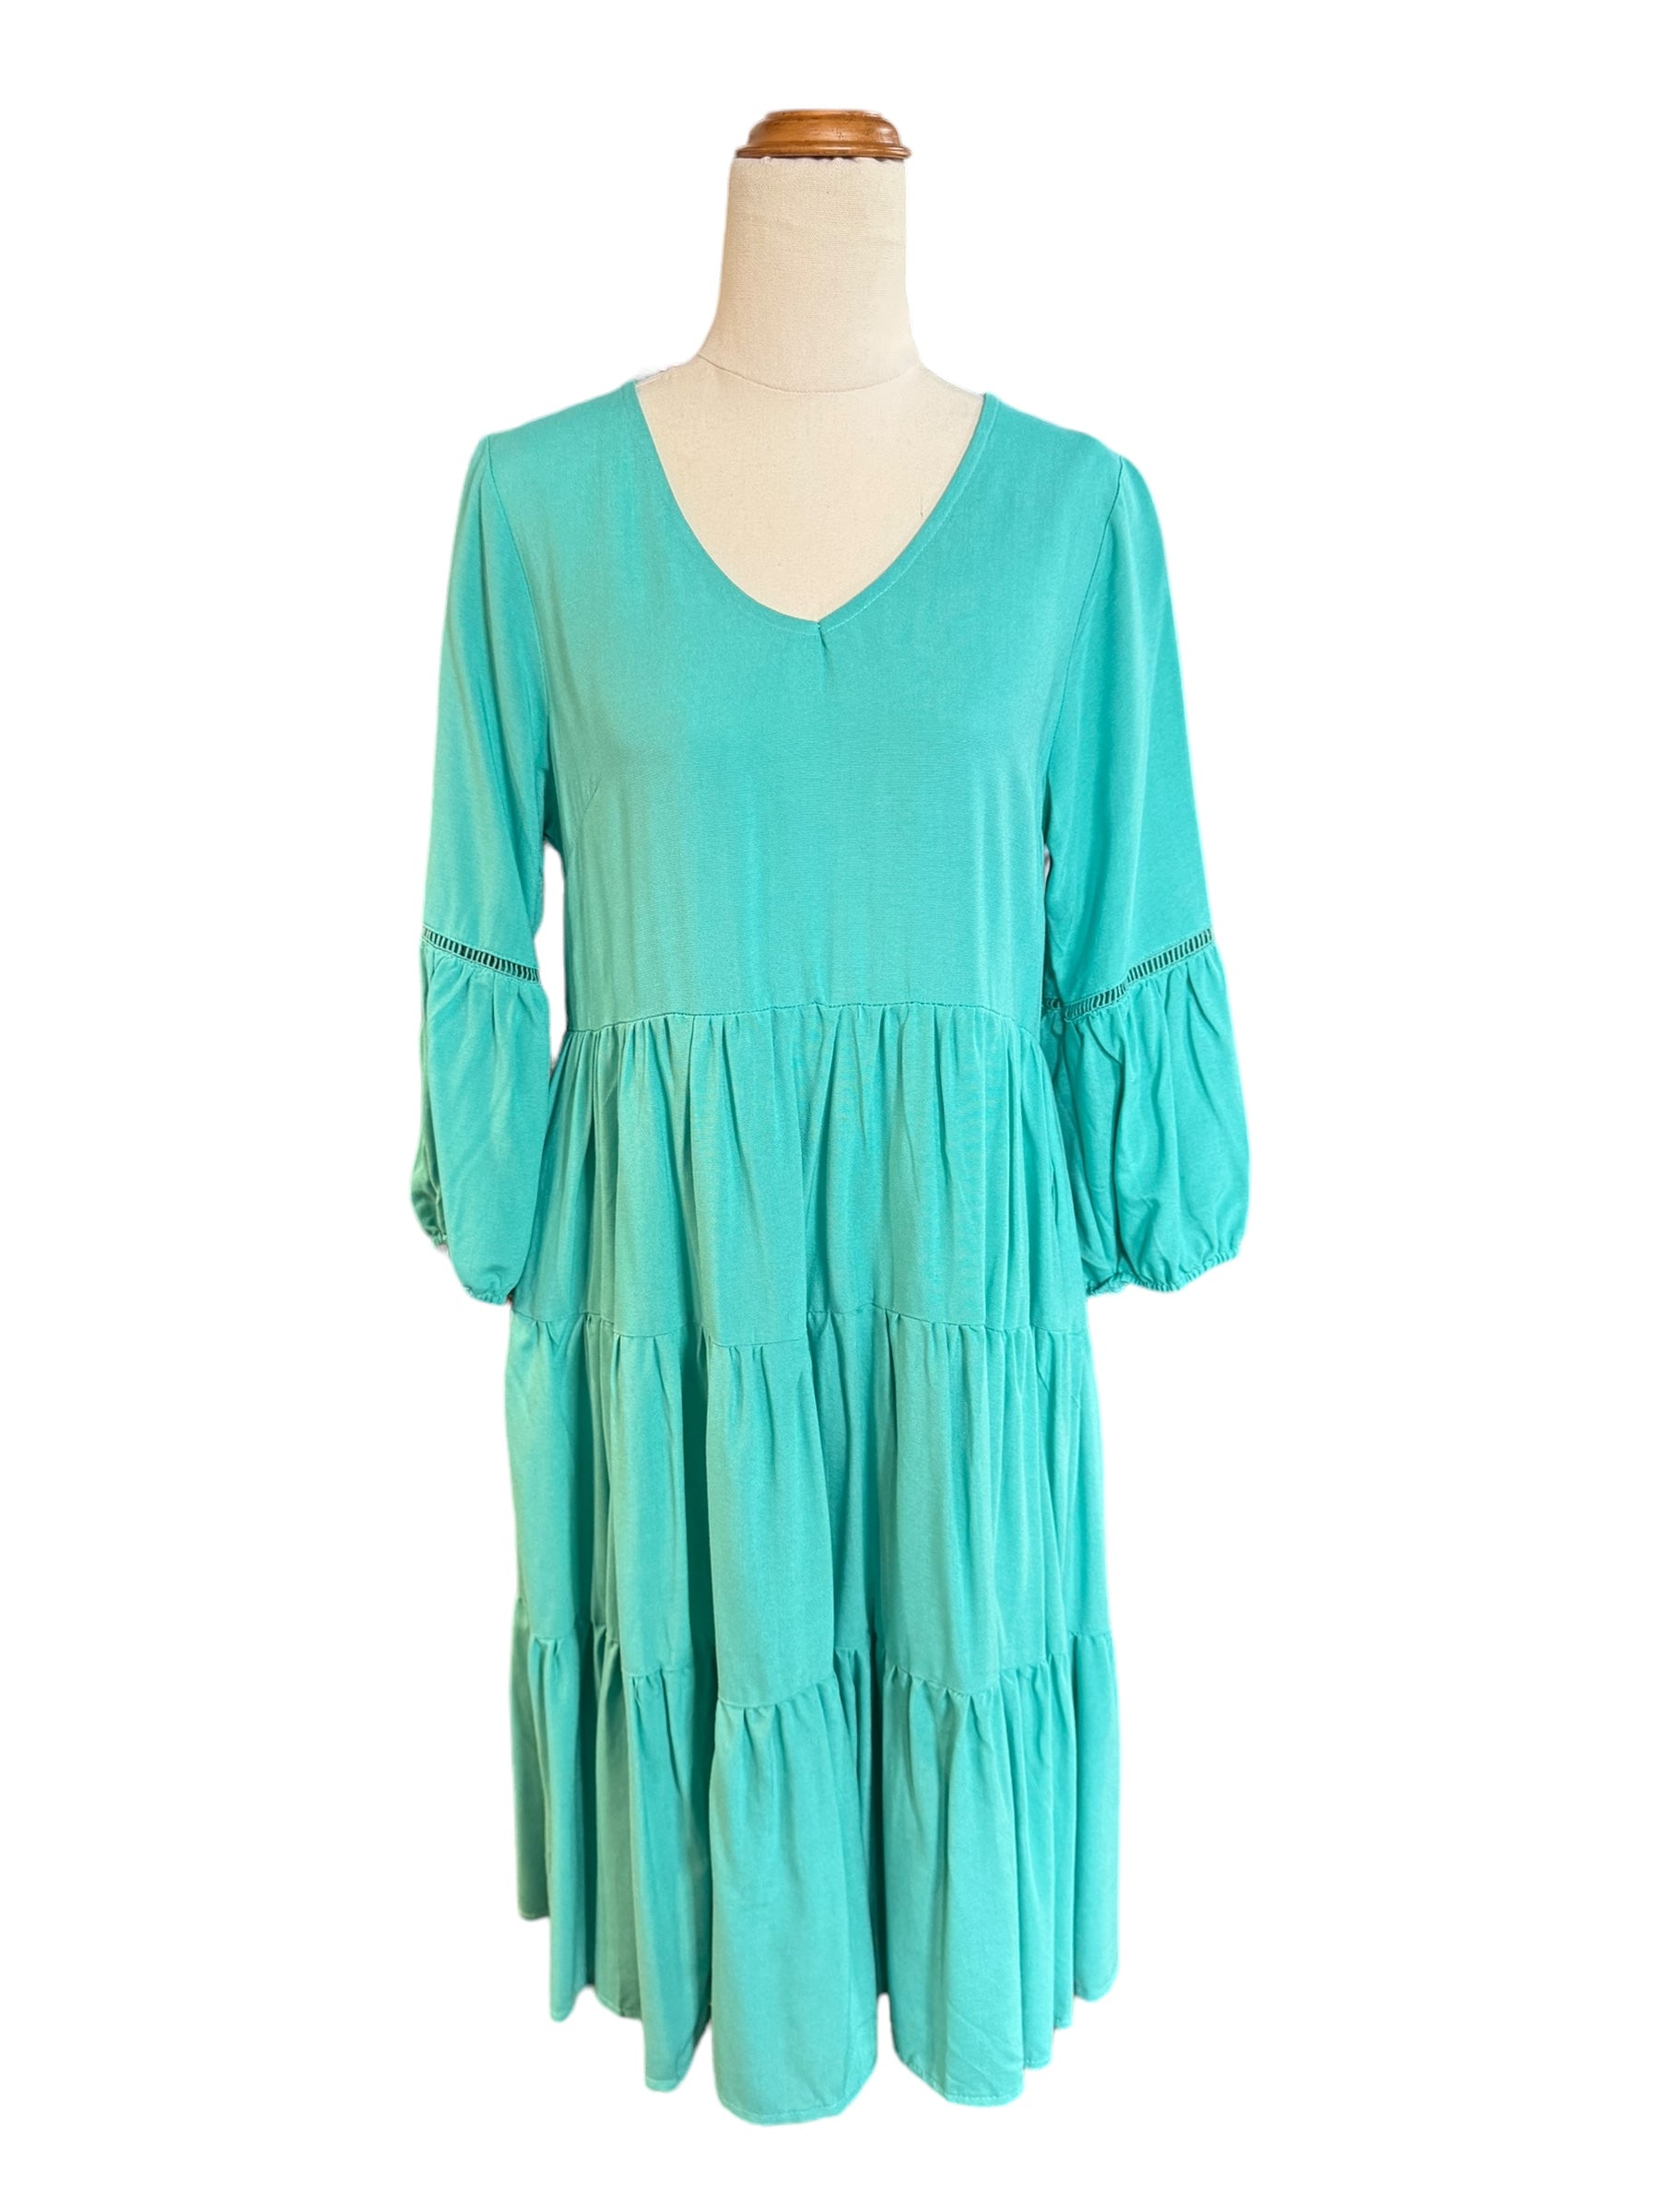 'Kath' Dress - Turquoise